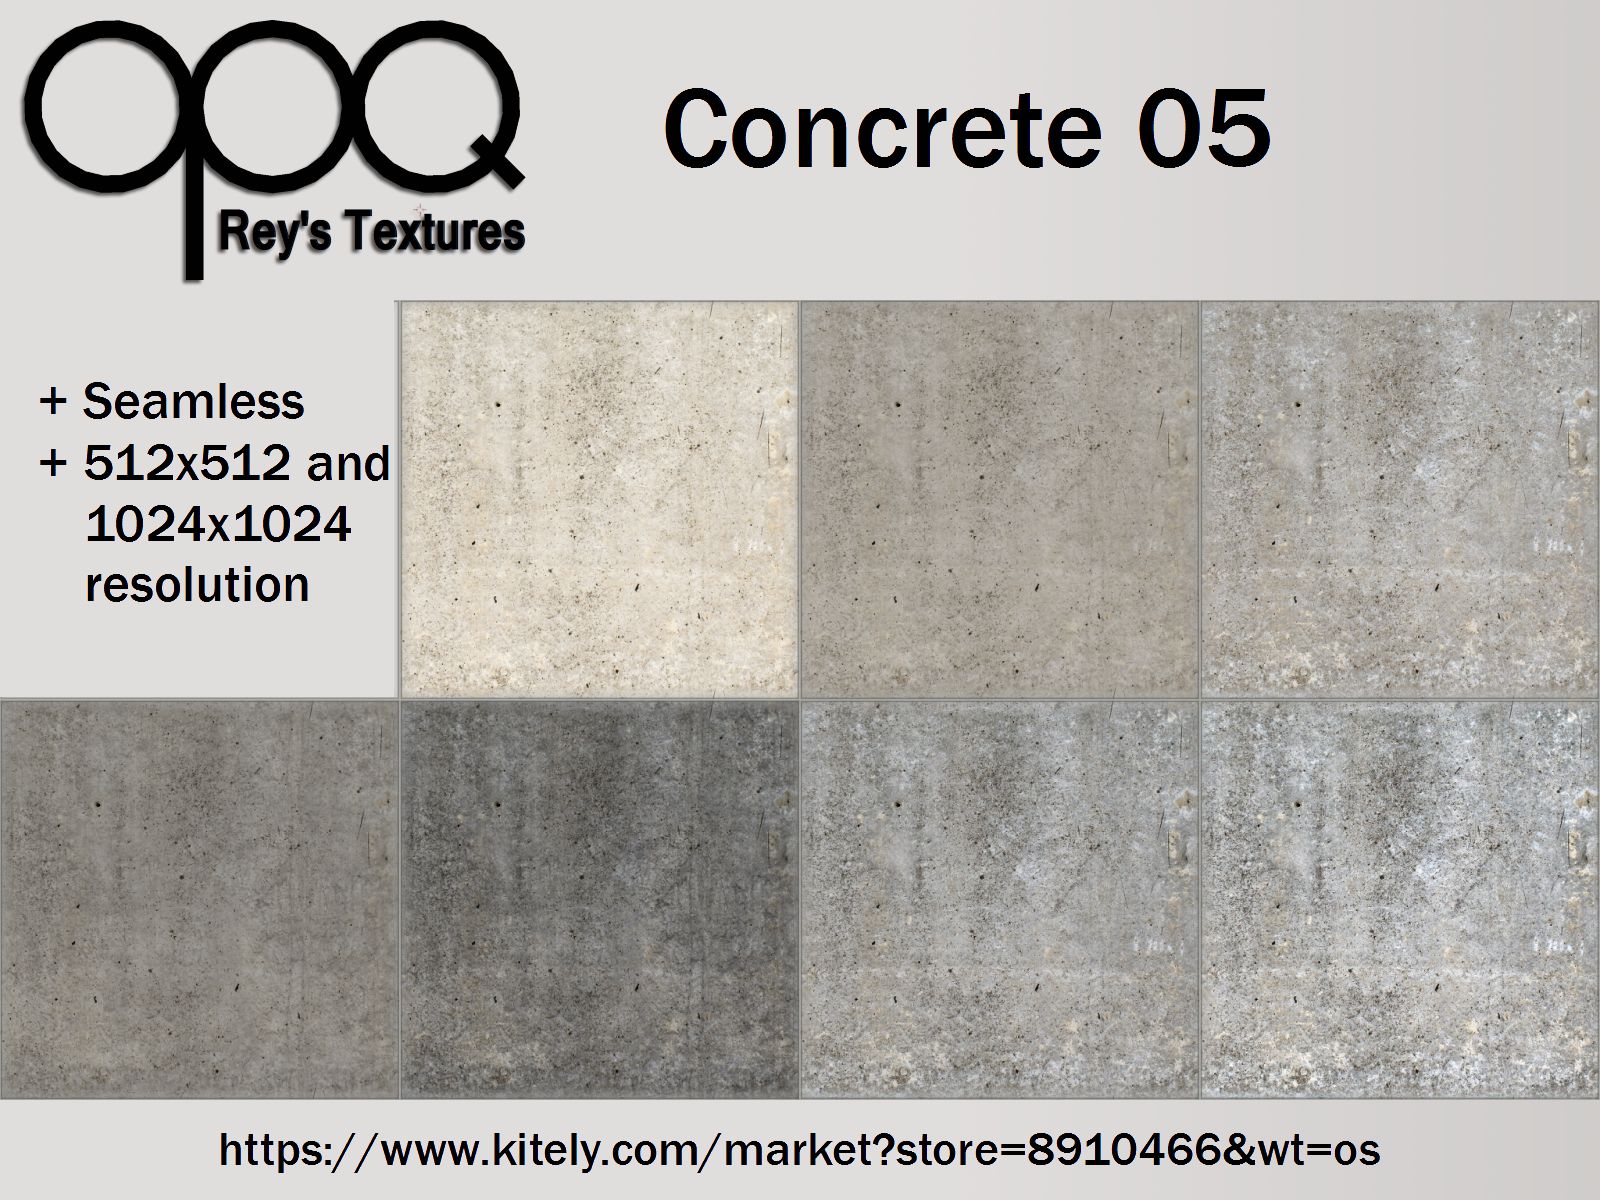 Rey's Concrete 05 Poster Kitely.jpg